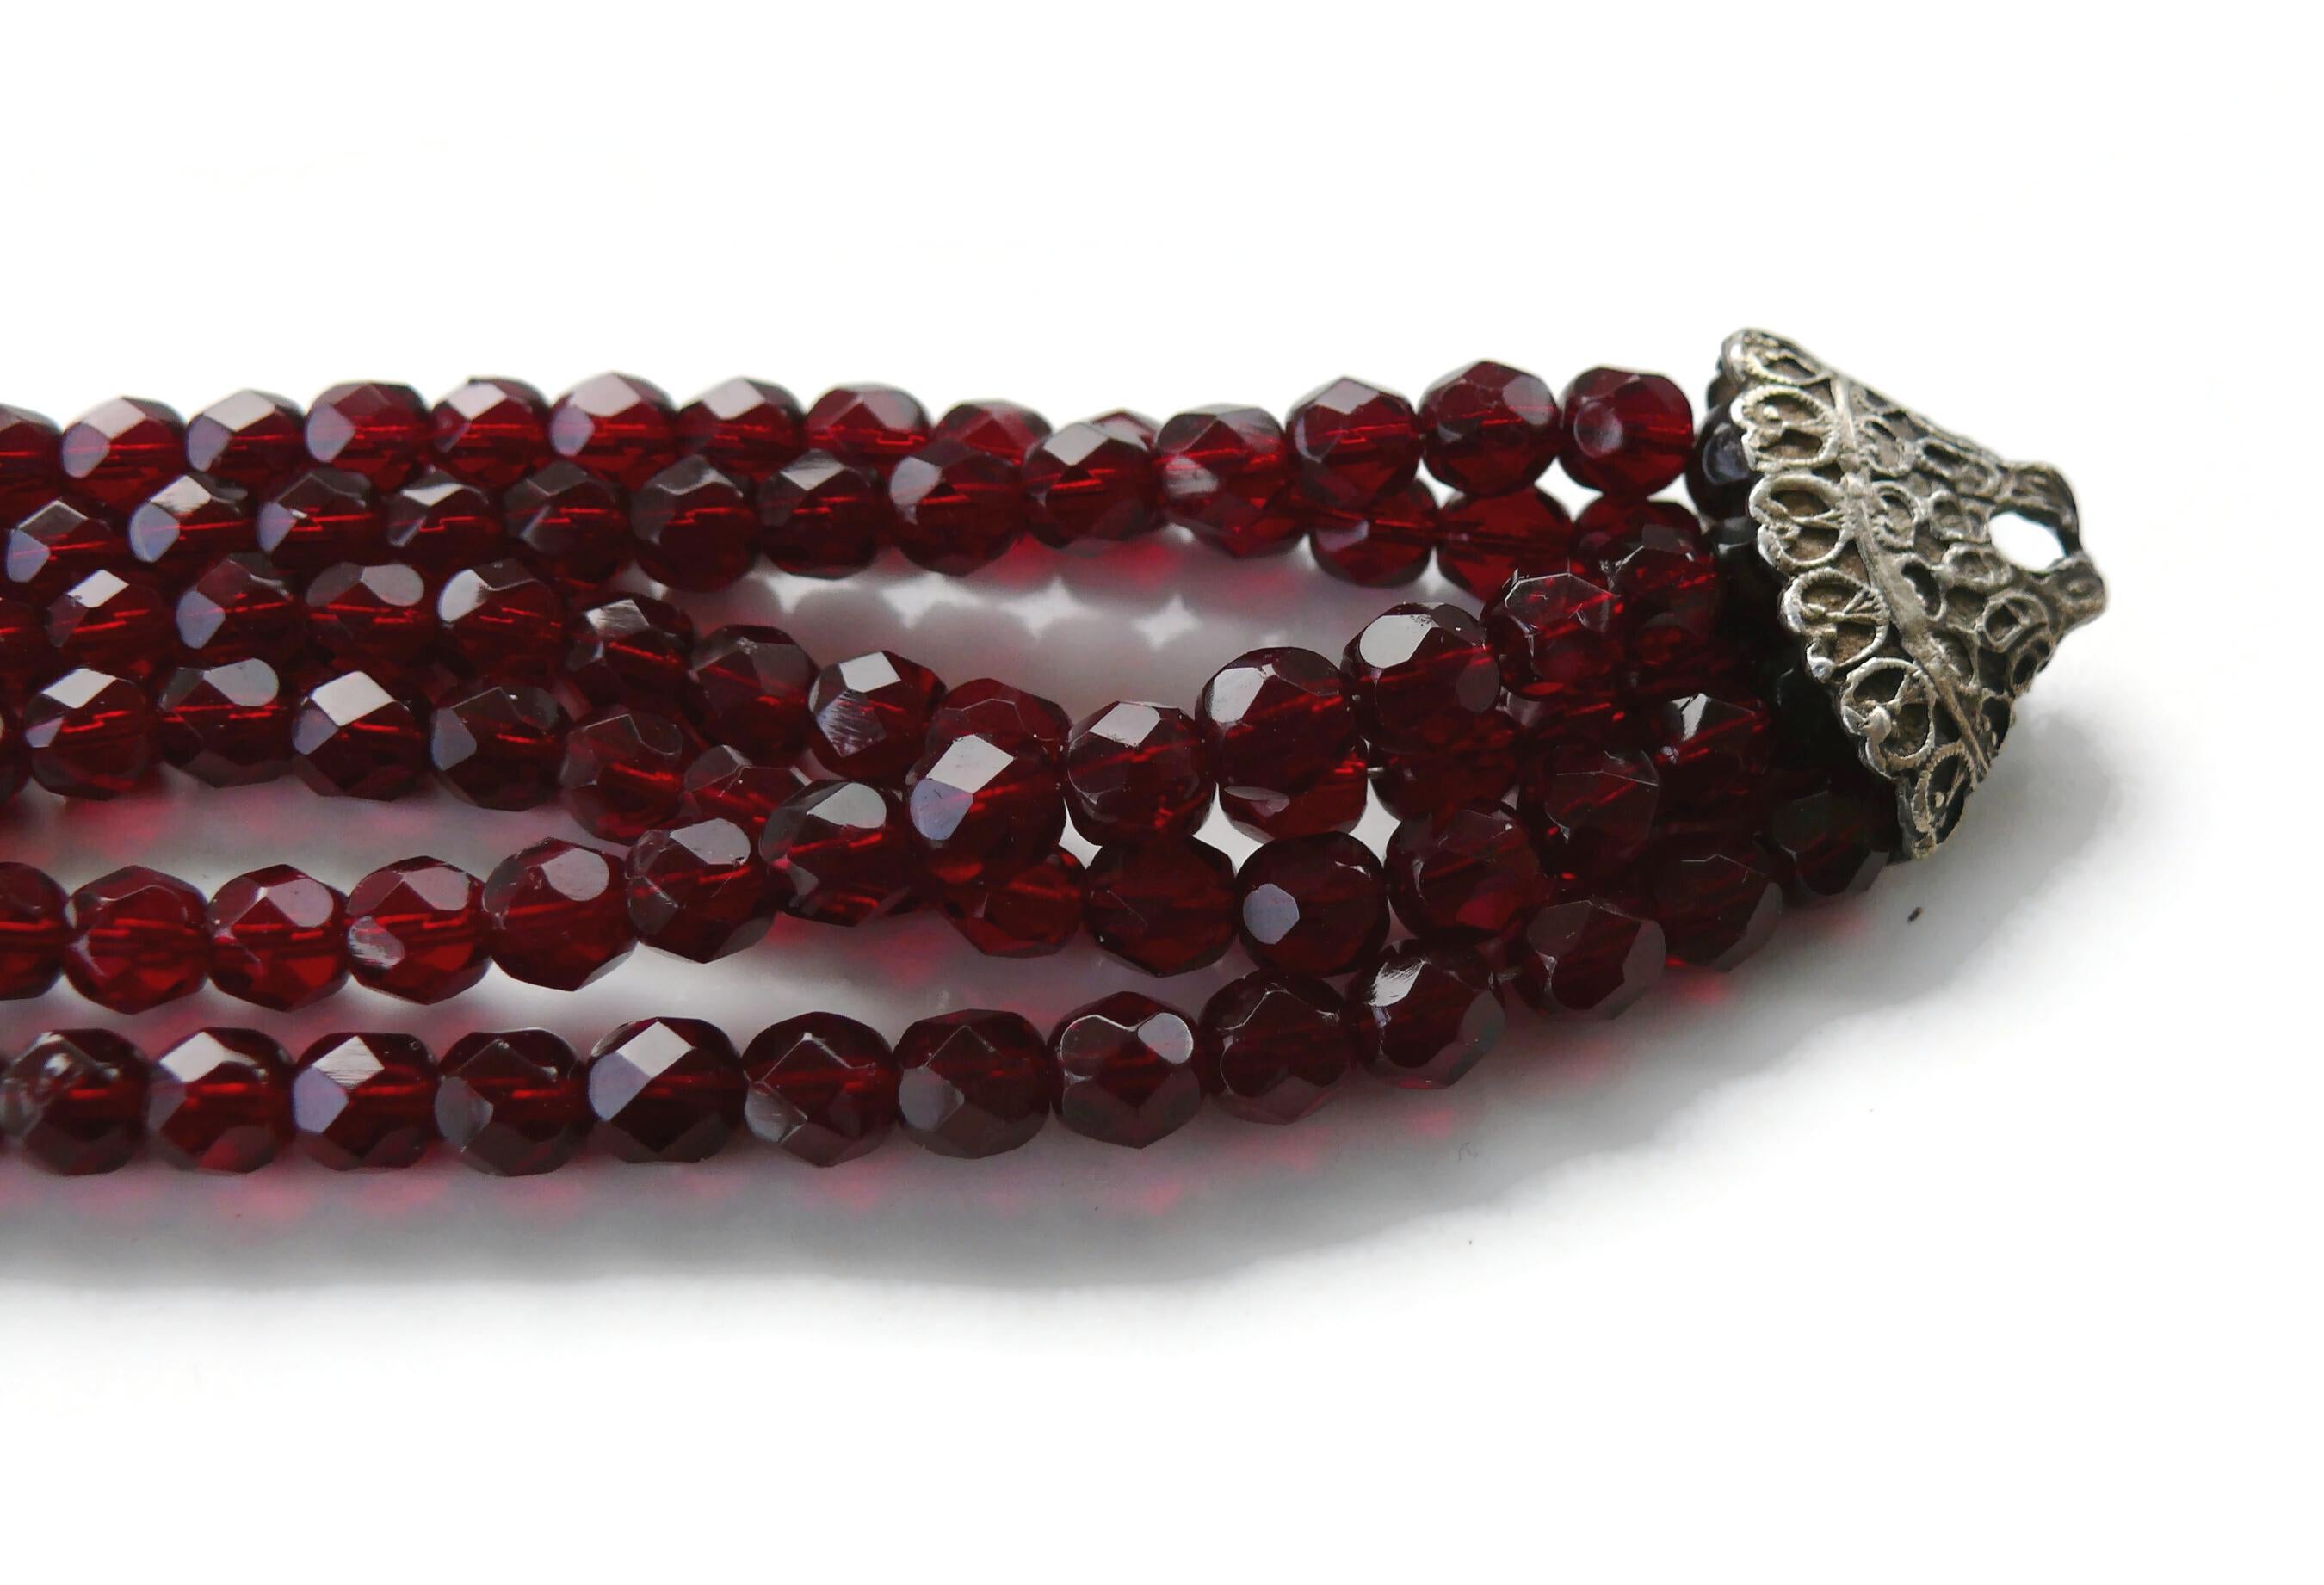 Women's Christian Dior Hypnotic Poison Promotional Multi Strand Garnet Beads Bracelet For Sale